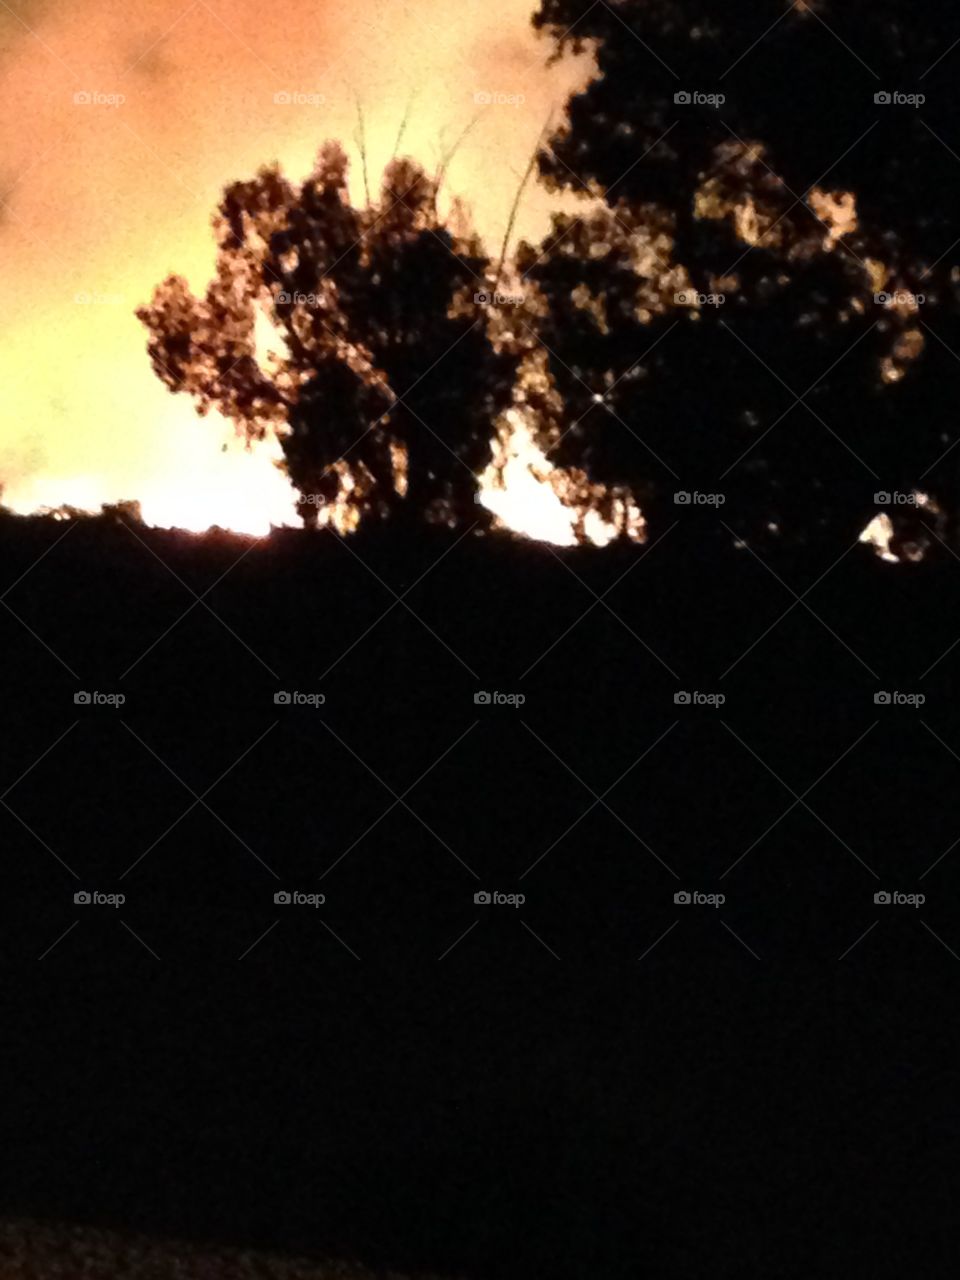 Nighttime shot trees back went by hay yard fire west of Phoenix Arizona in November 2014